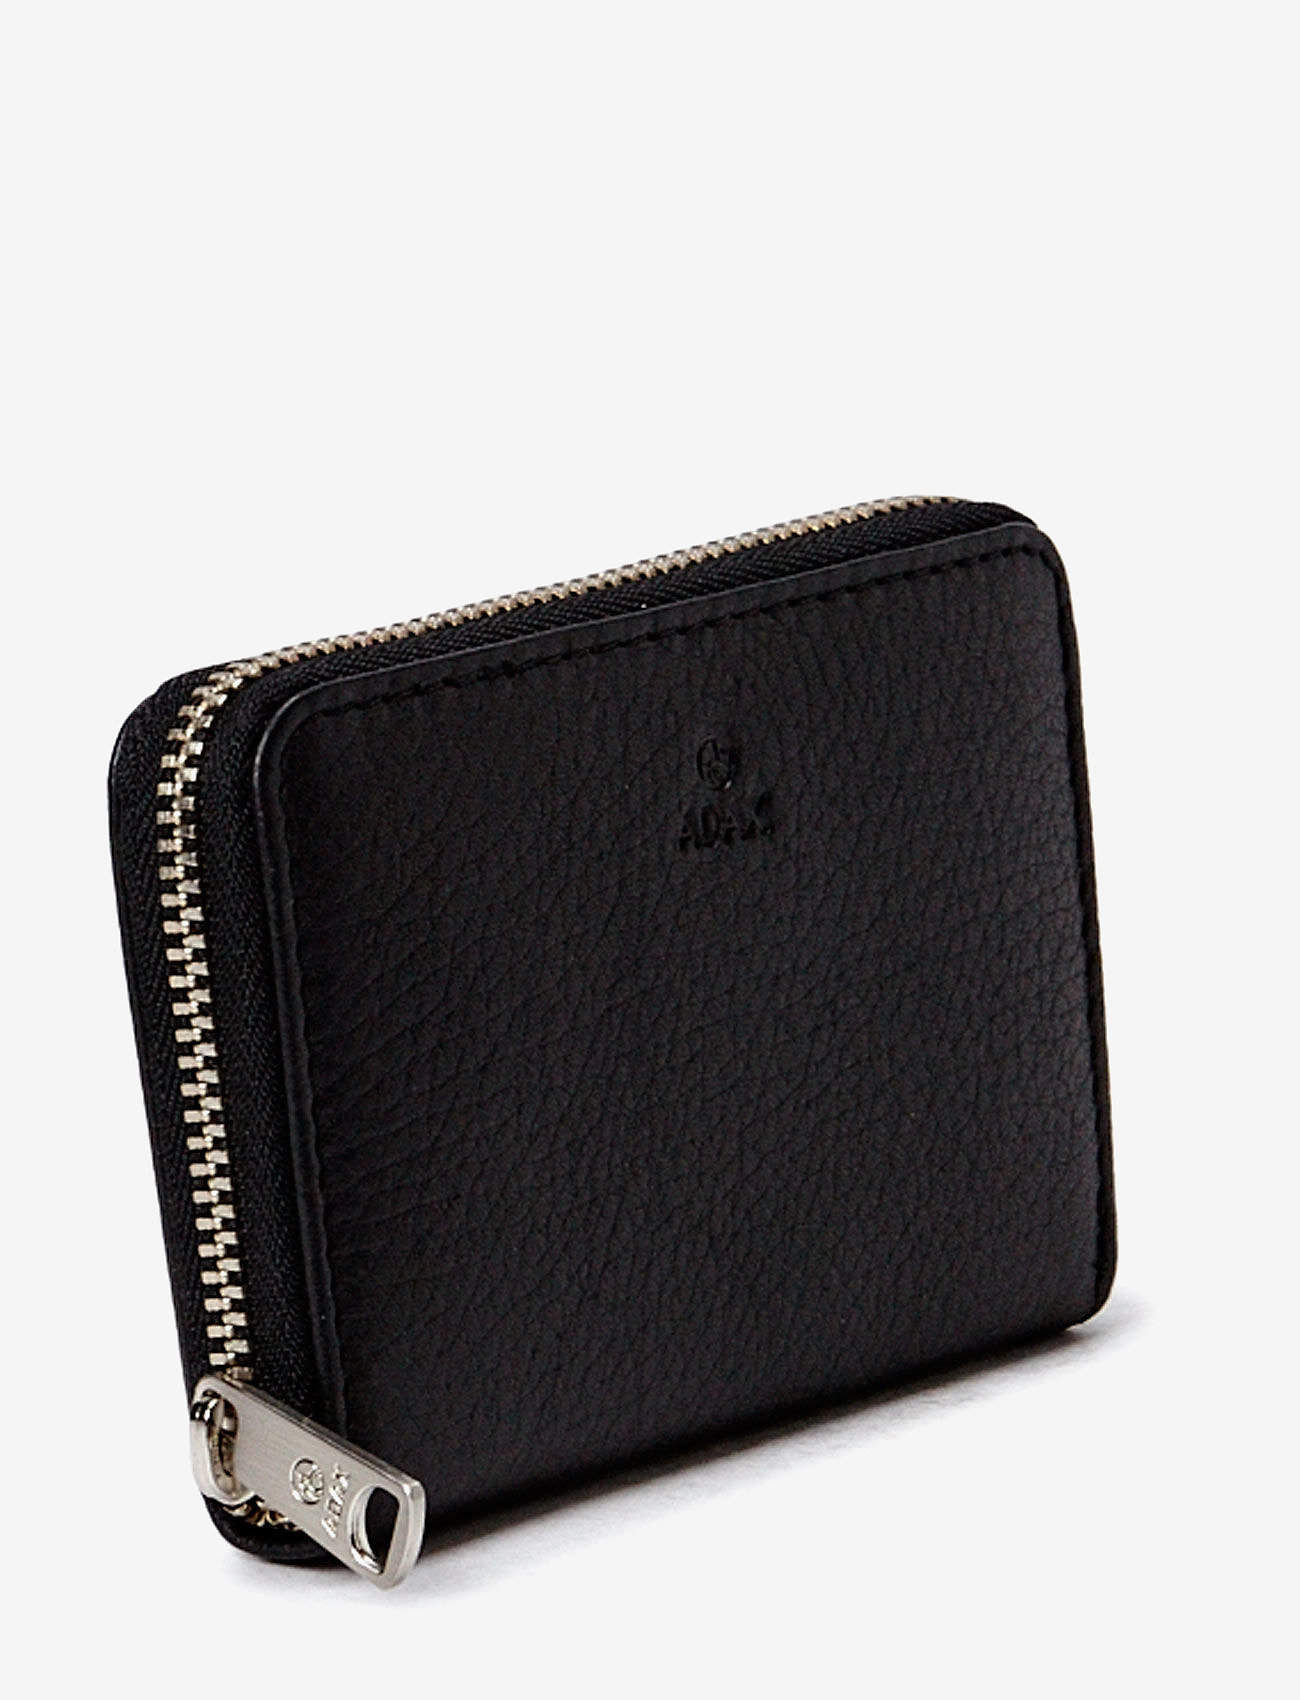 Adax - Cormorano wallet Cornelia - black - 1